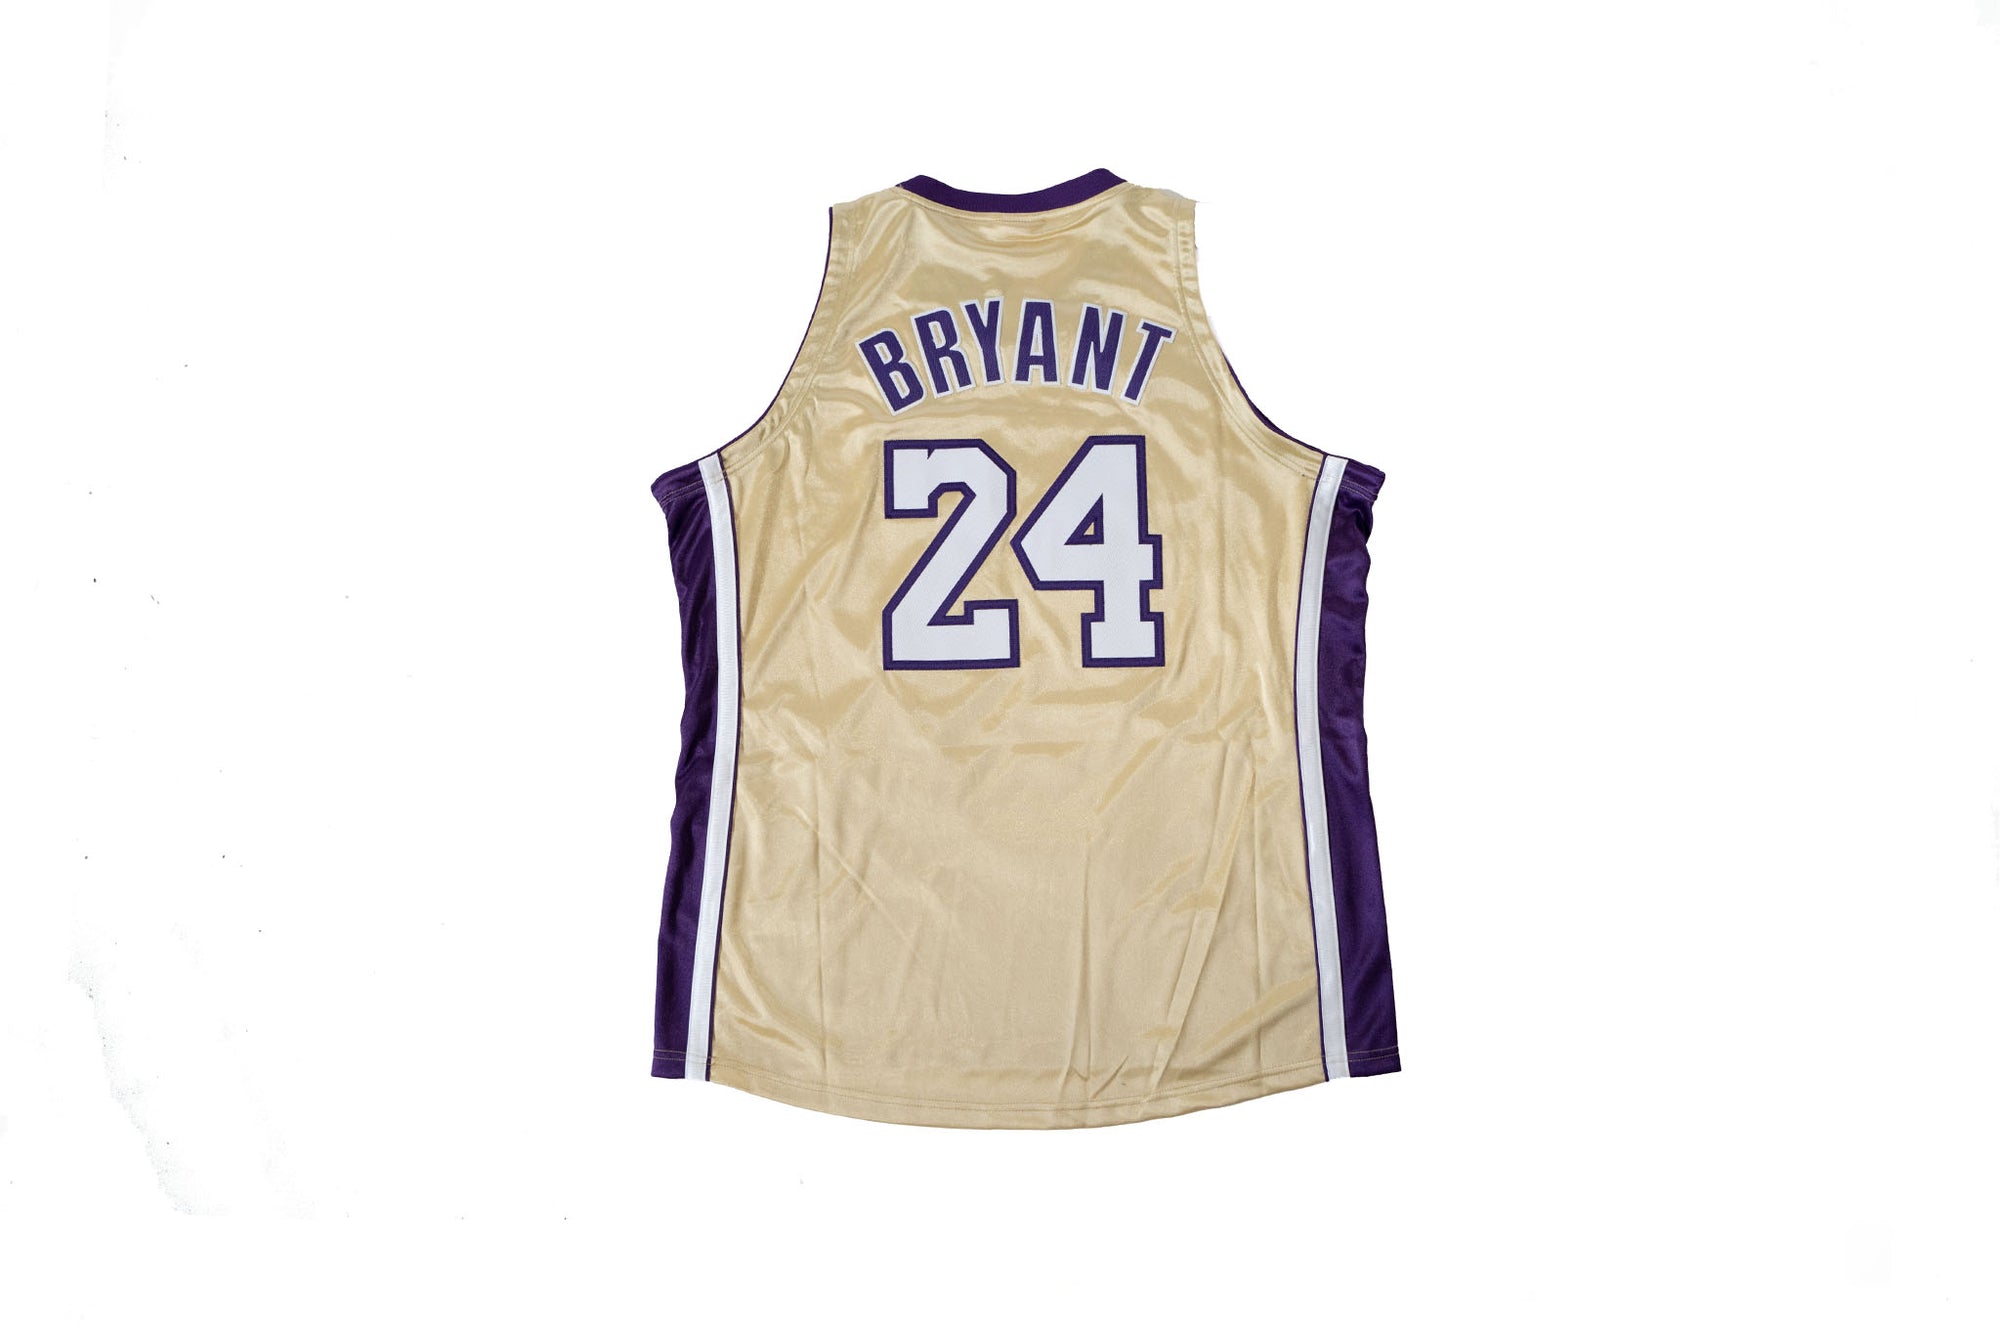 Kobe Bryant Jerseys, Kobe Bryant Shirts, Basketball Apparel, Kobe